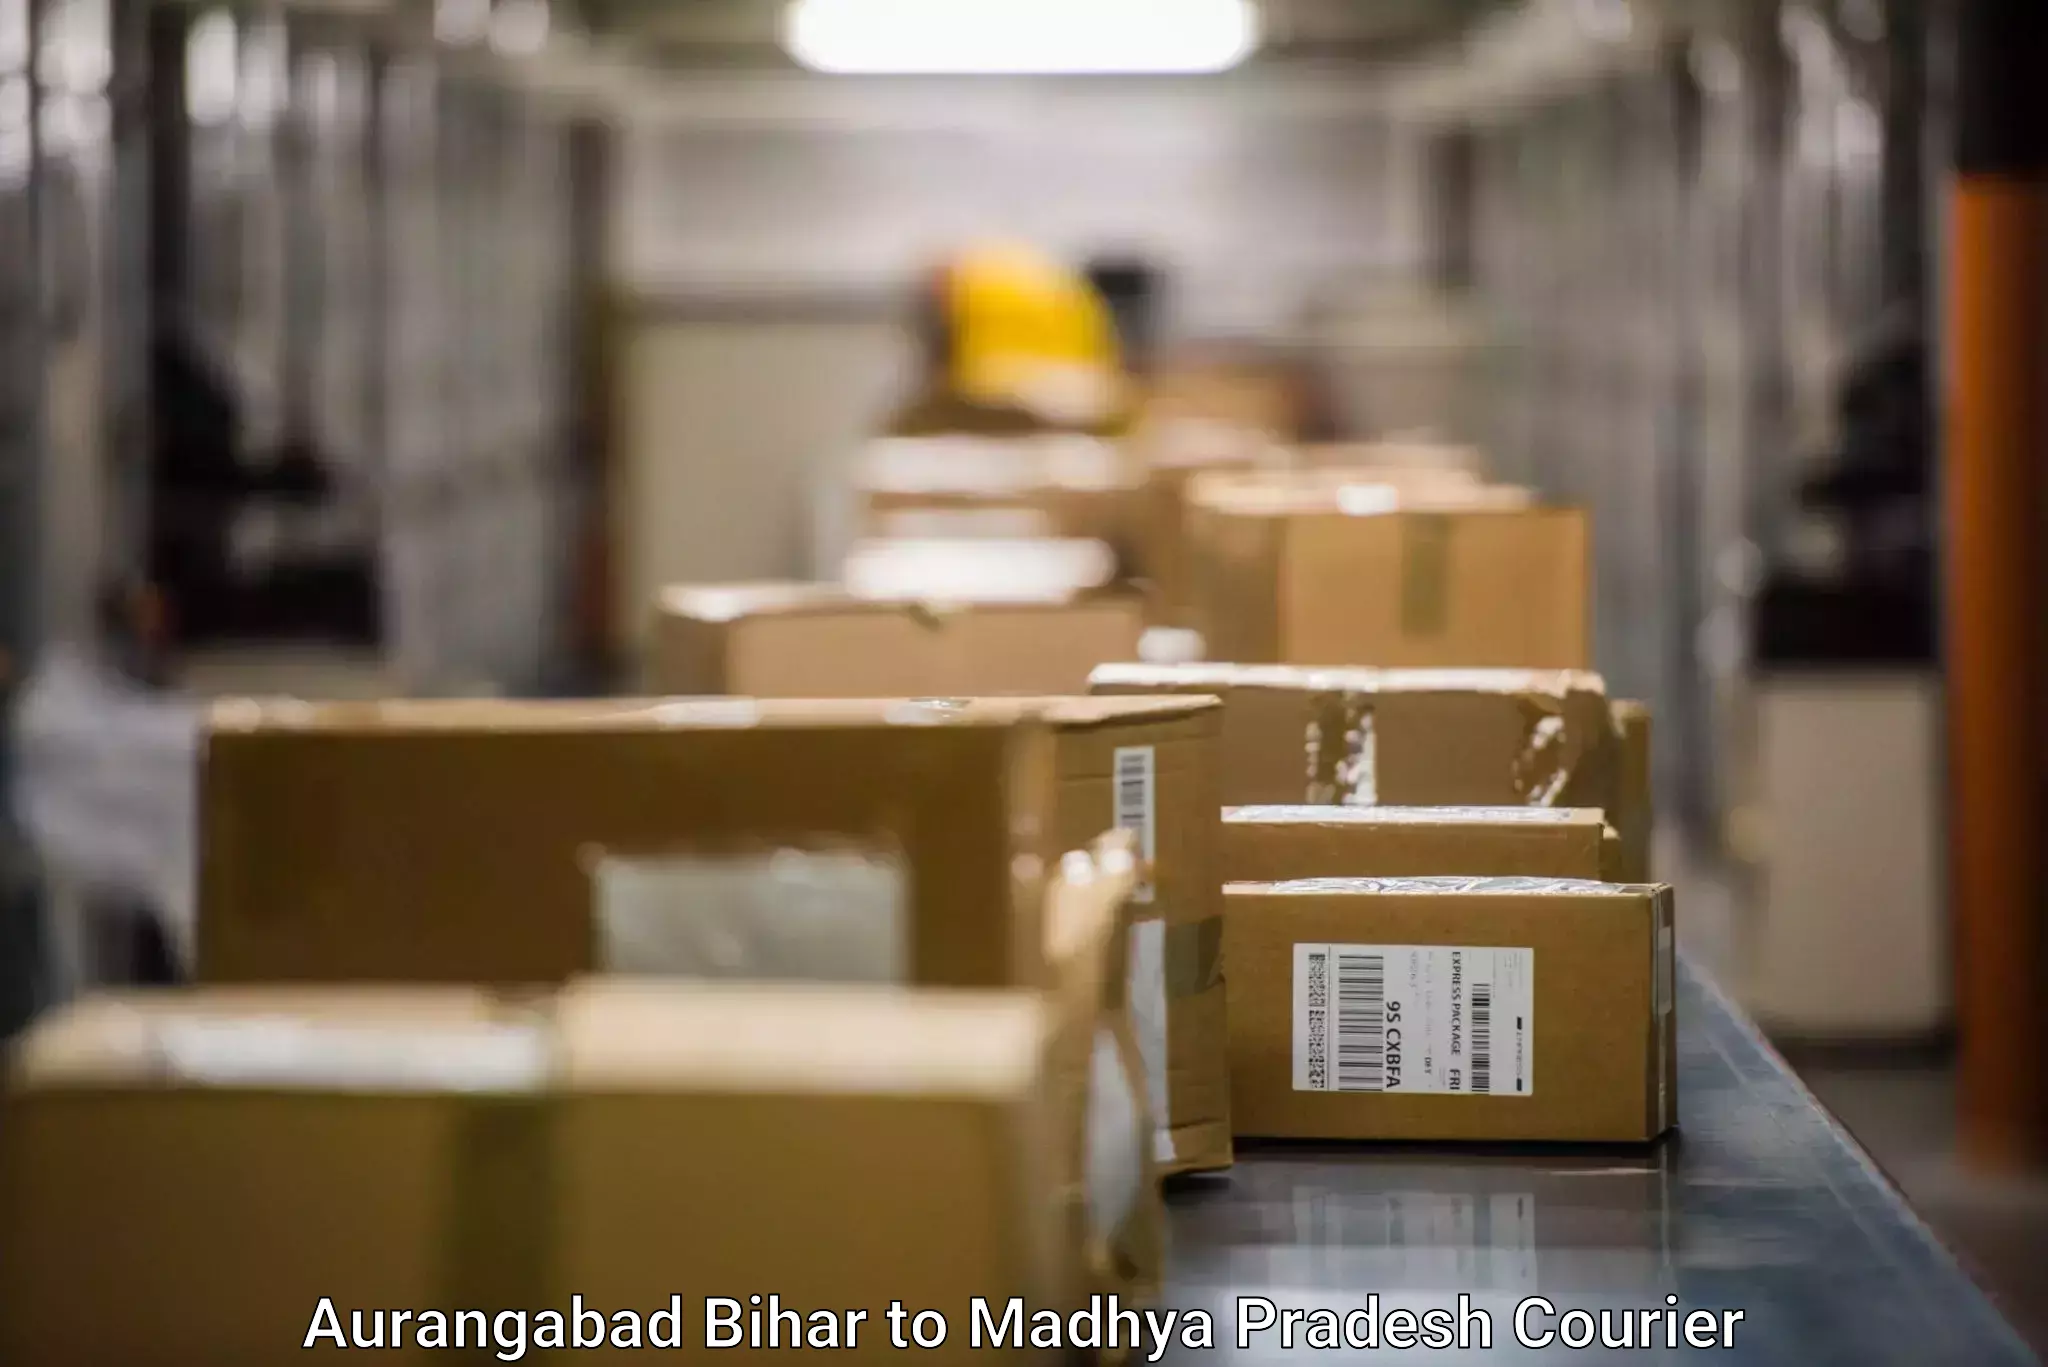 International courier networks Aurangabad Bihar to Mandla